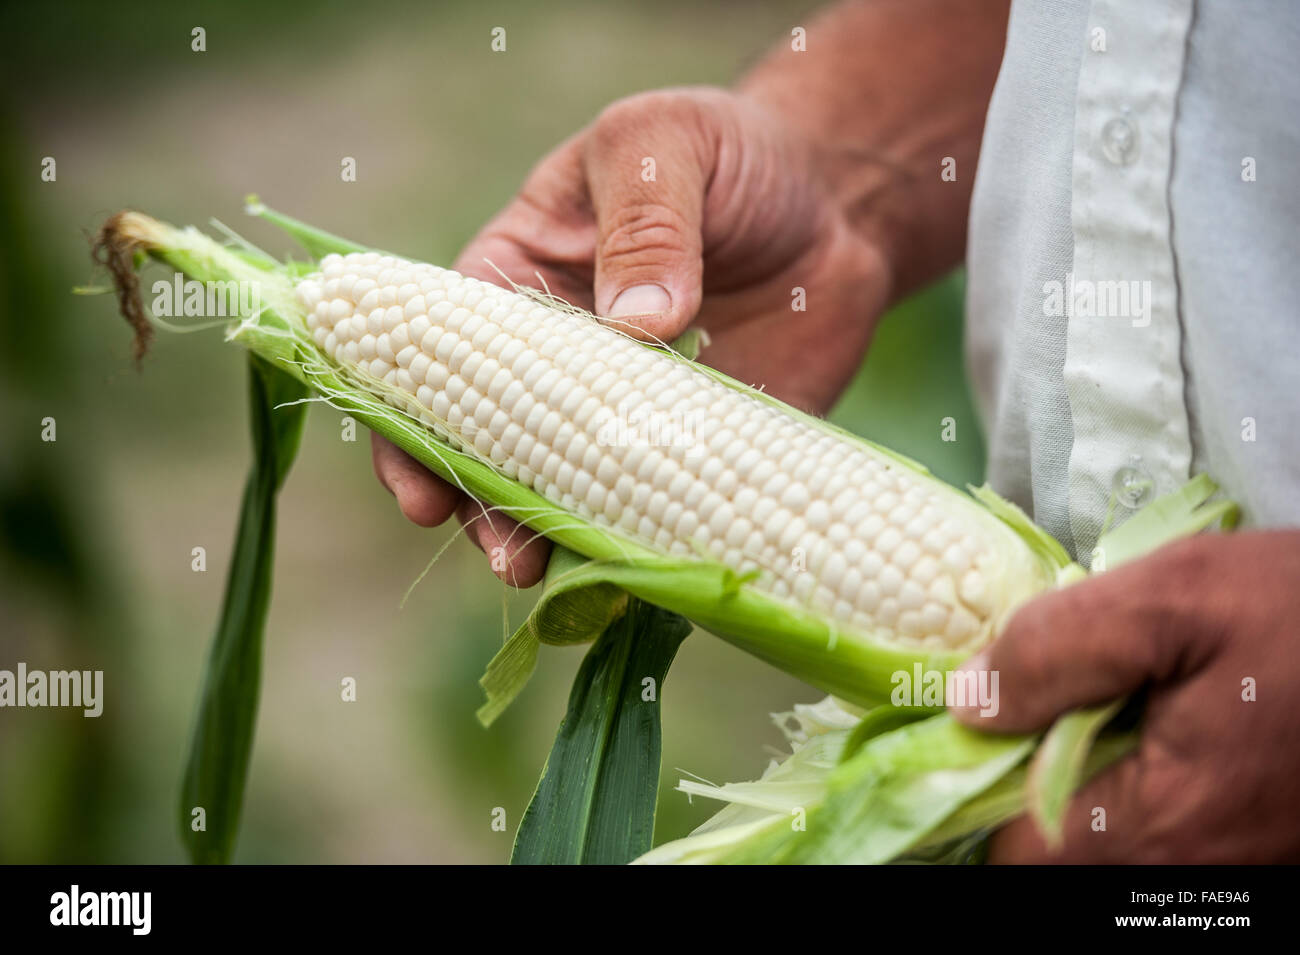 Man holding an ear of corn Stock Photo